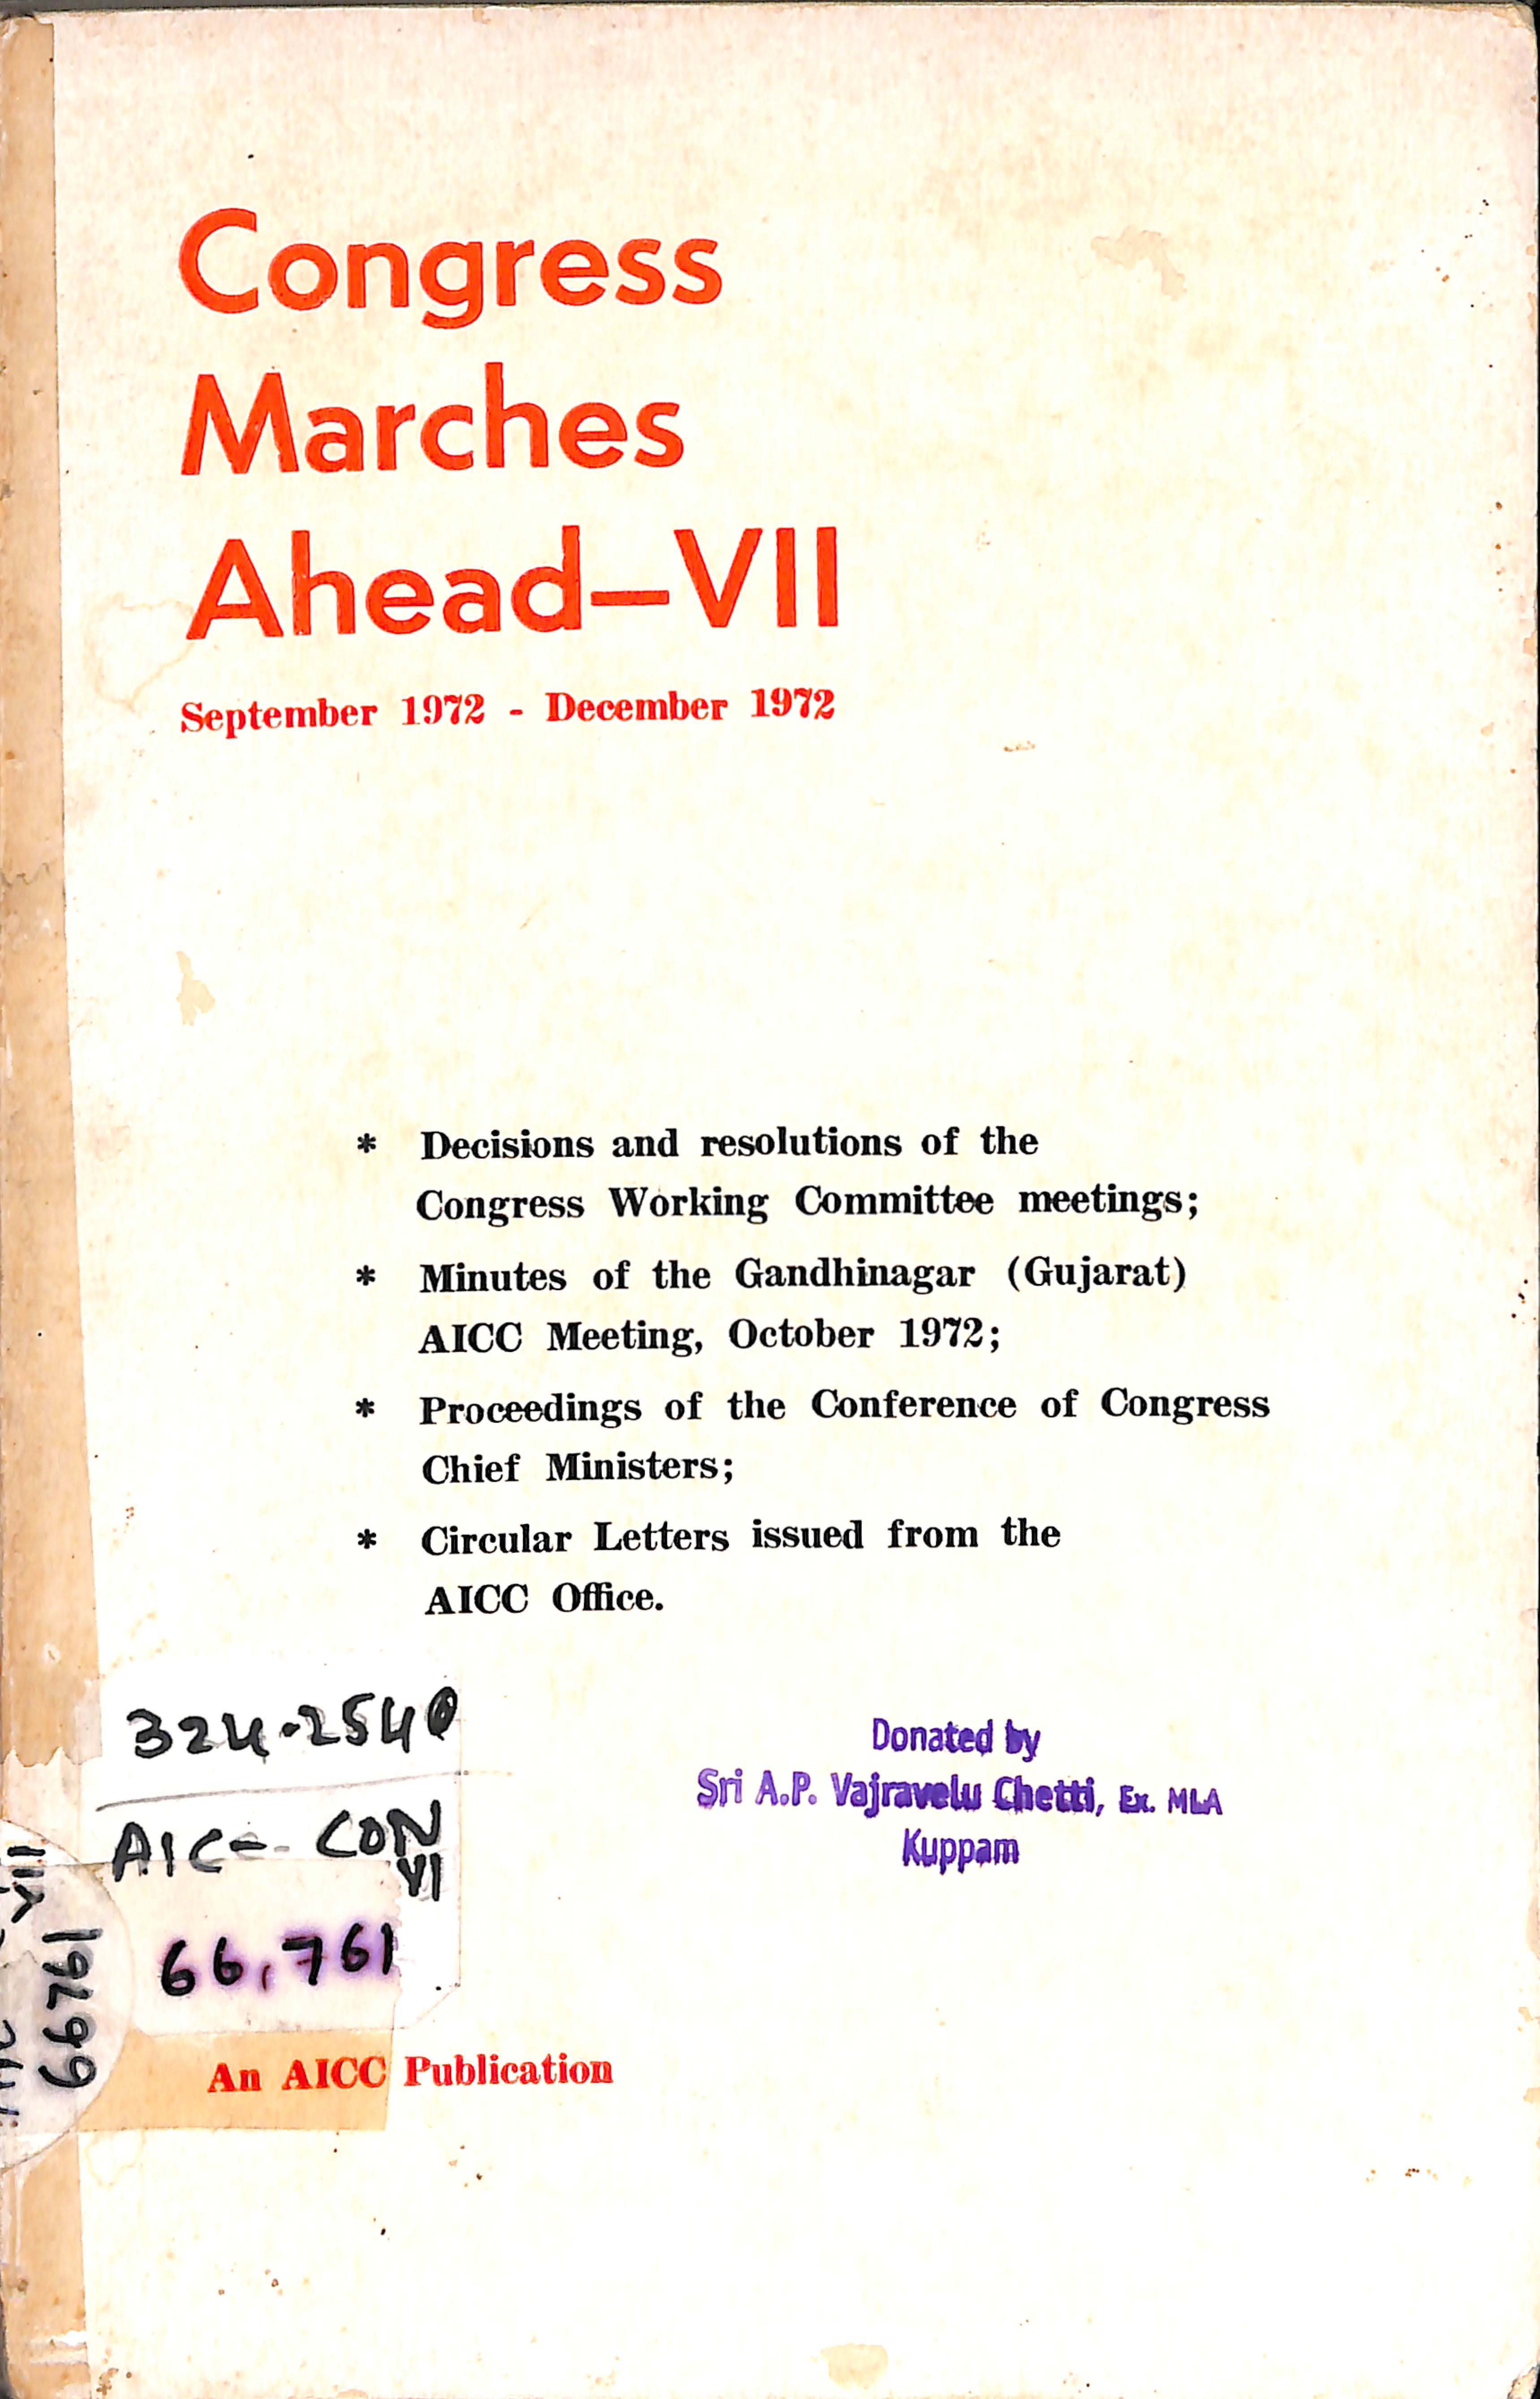 Congress marches ahead-Vll (September 1972-December 1972)